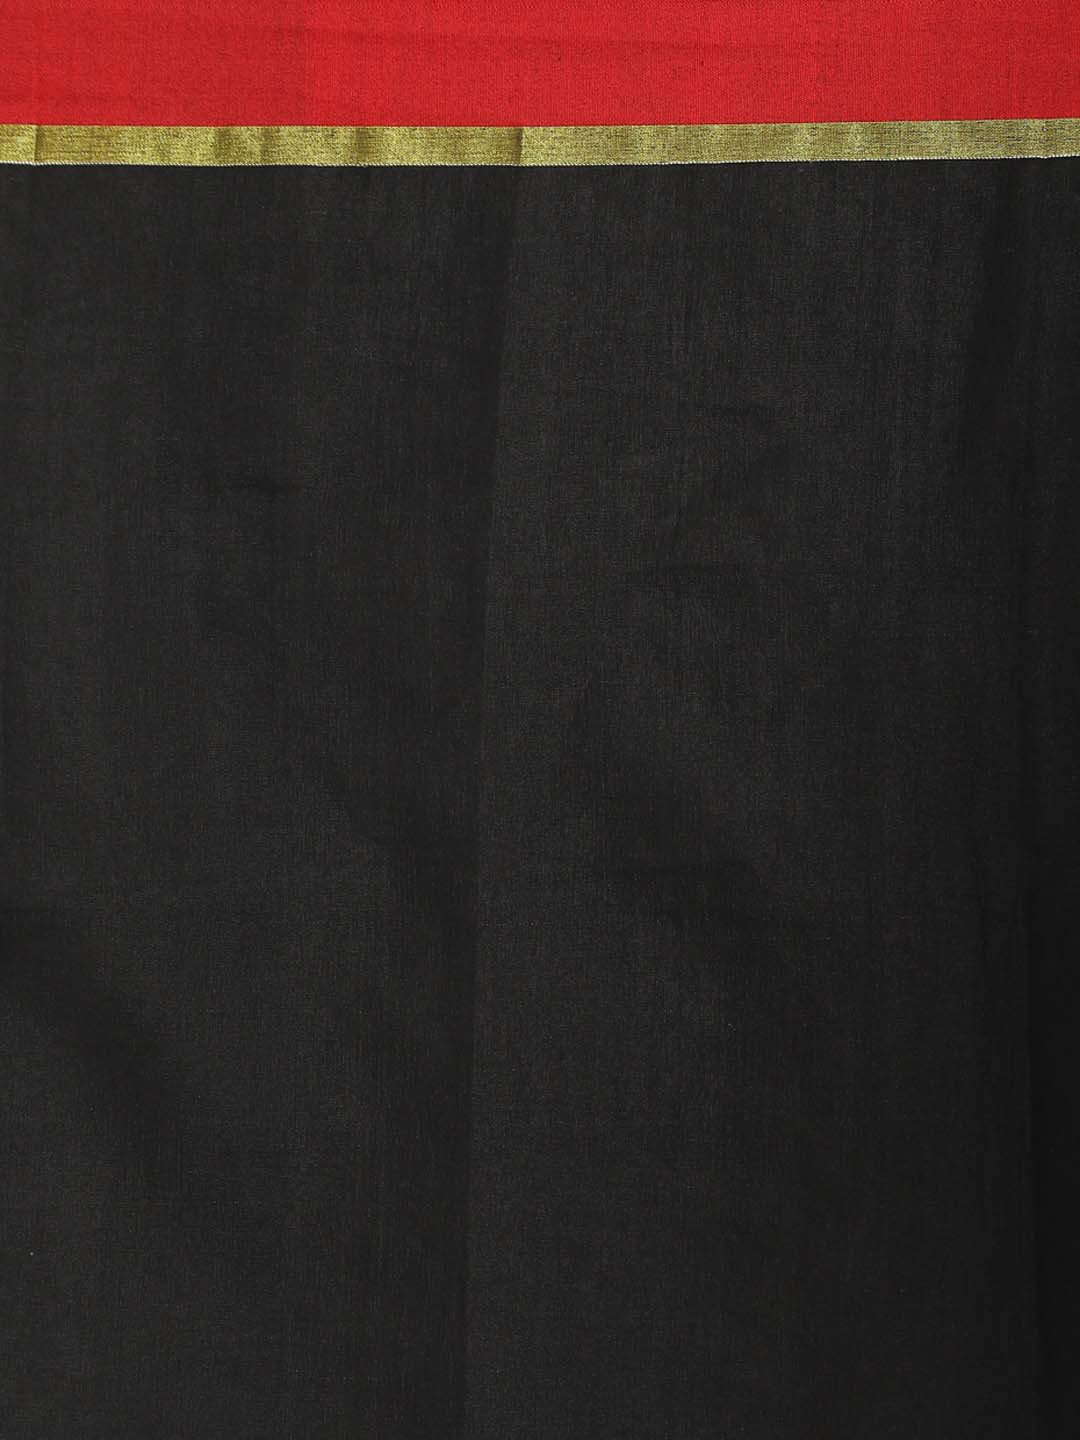 Indethnic Grey Bengal Handloom Cotton Blend Work Saree - Saree Detail View